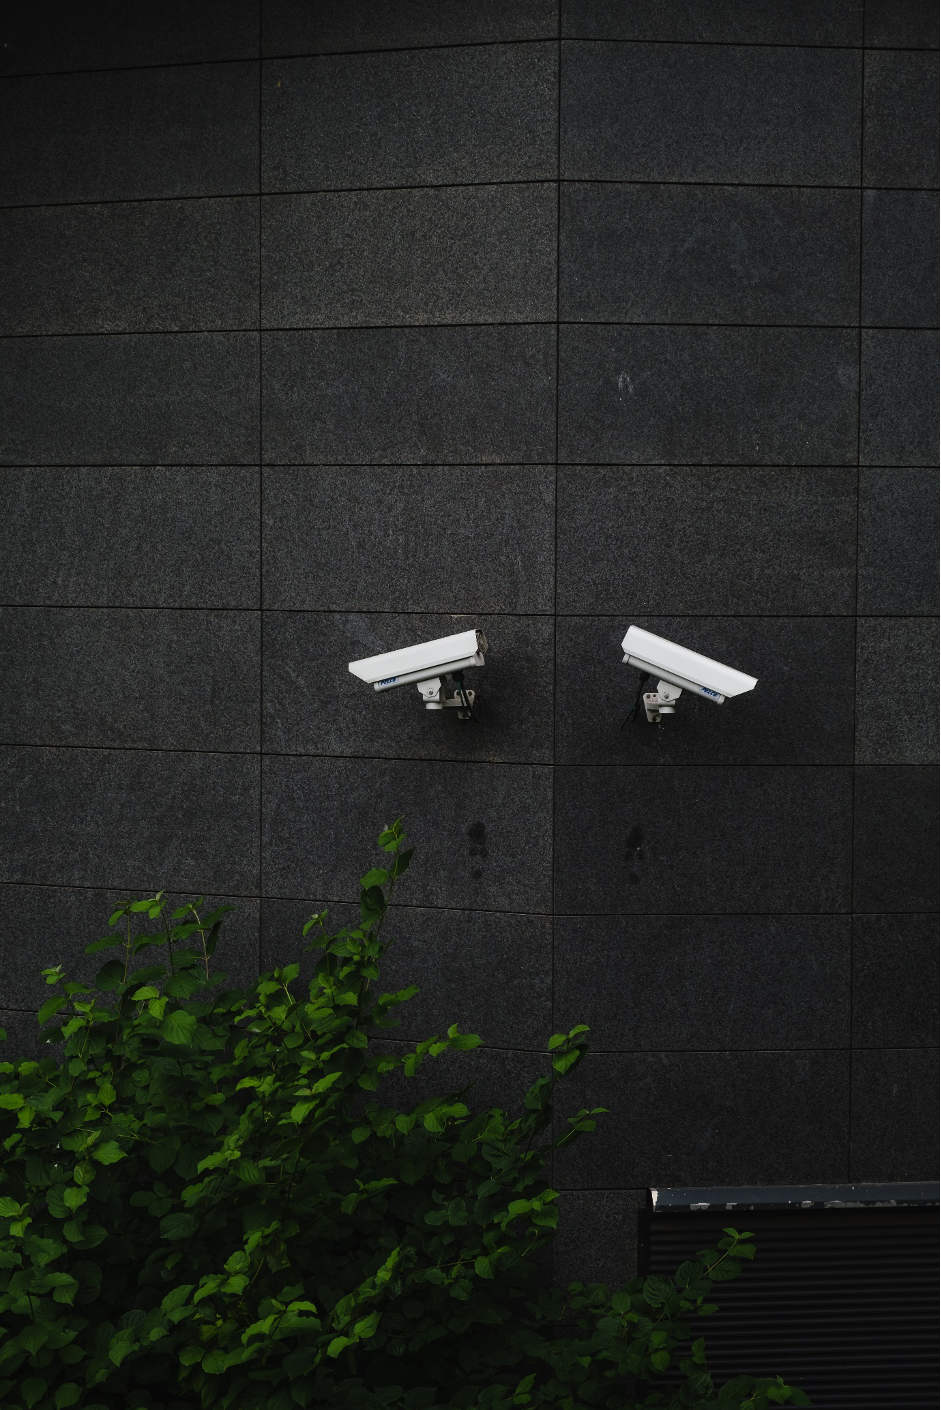 security camera helps prevent crime